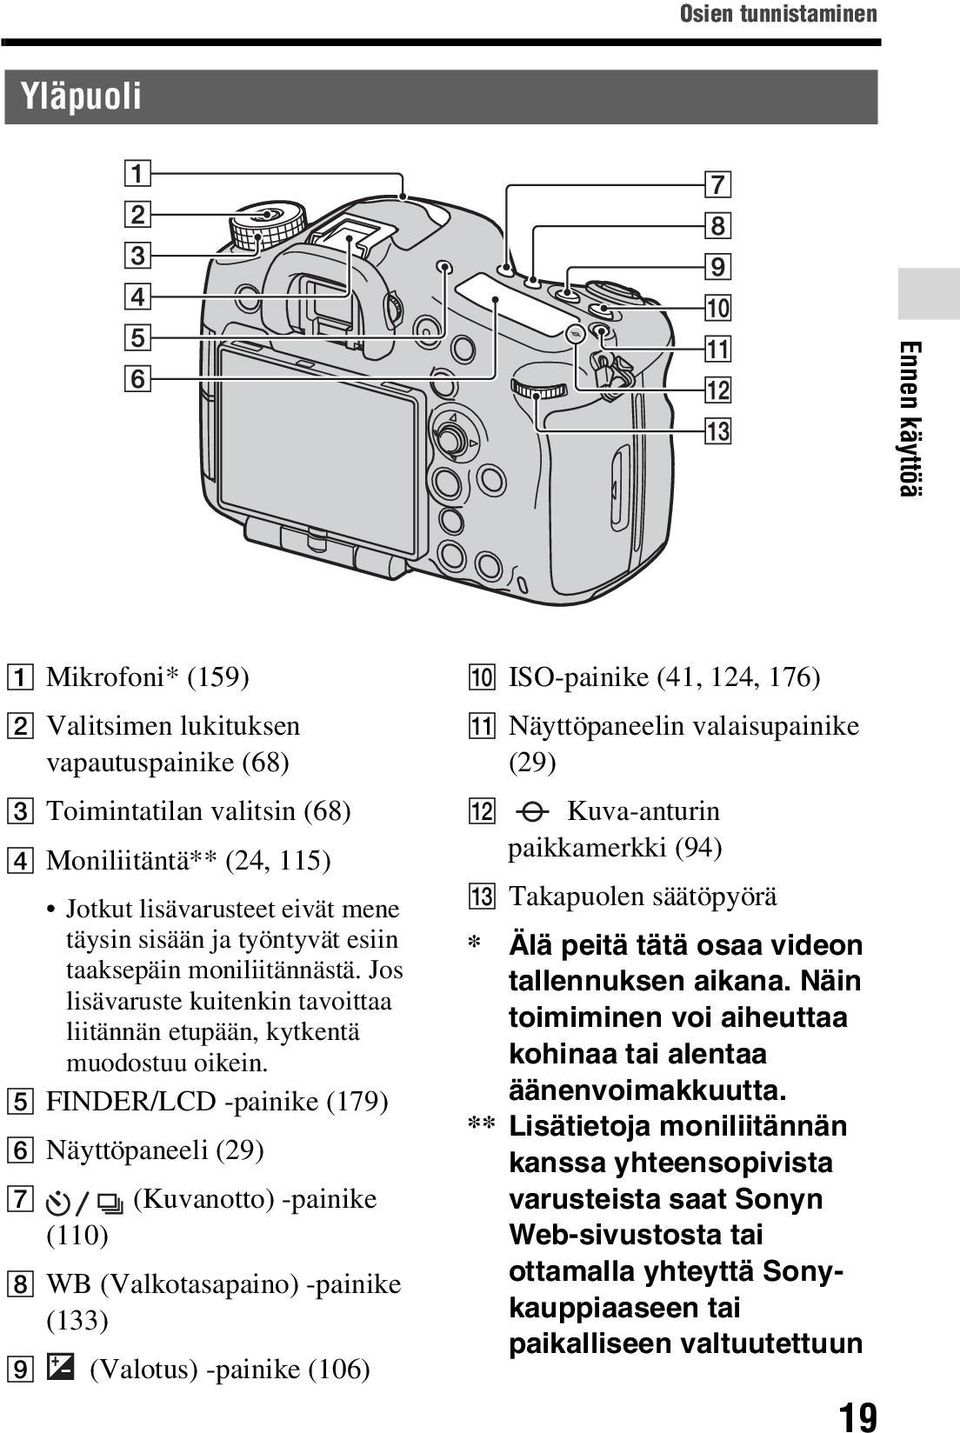 E FINDER/LCD -painike (179) F Näyttöpaneeli (29) G (Kuvanotto) -painike (110) H WB (Valkotasapaino) -painike (133) I (Valotus) -painike (106) J ISO-painike (41, 124, 176) K Näyttöpaneelin